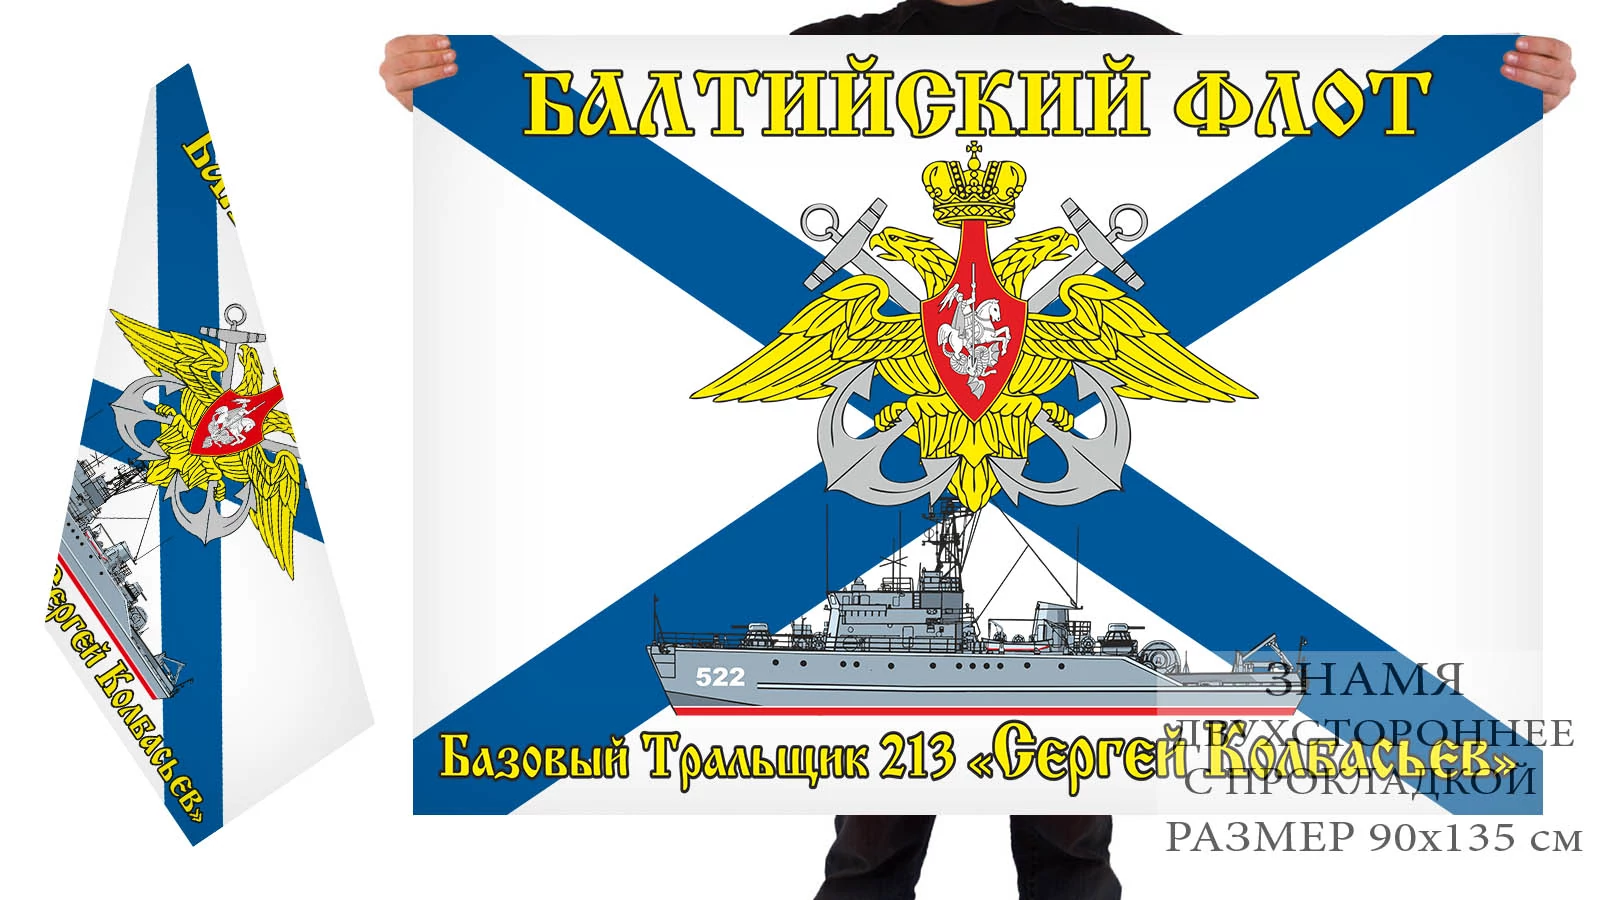 Двусторонний флаг БТ-213 "Сергей Колбасьев"